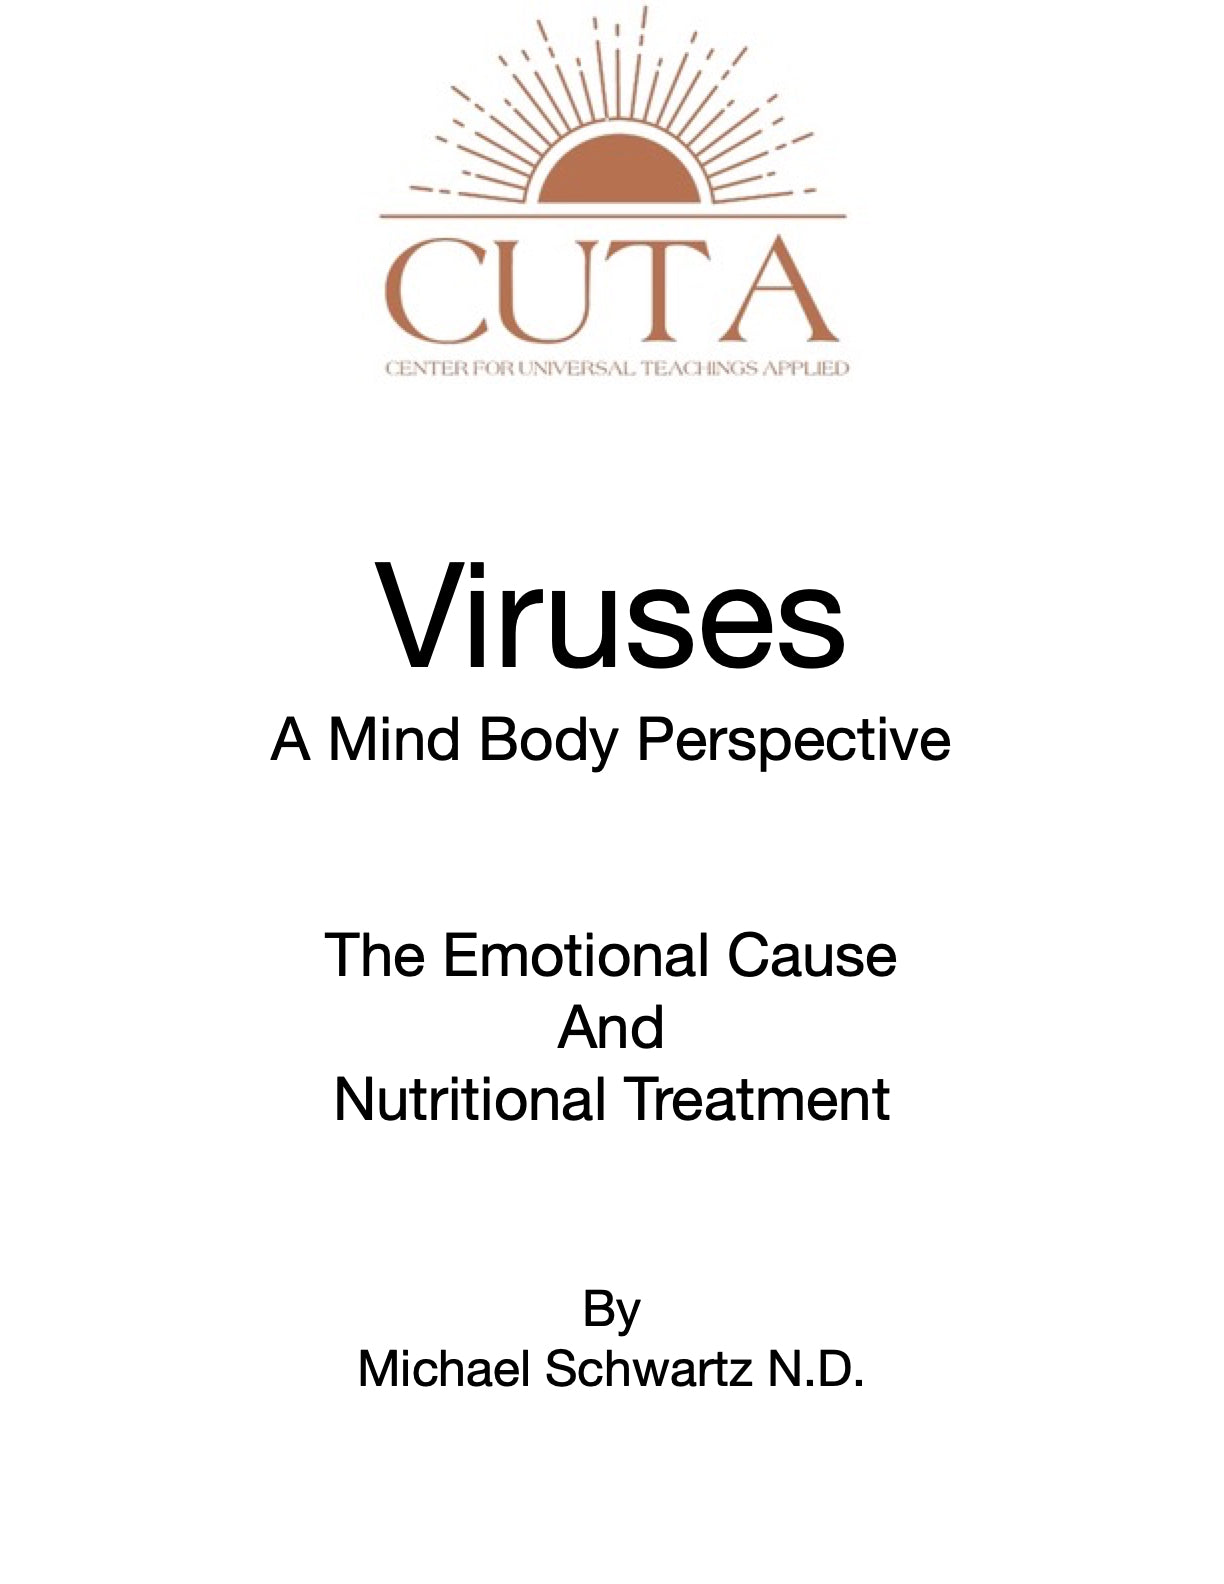 Viruses Booklet